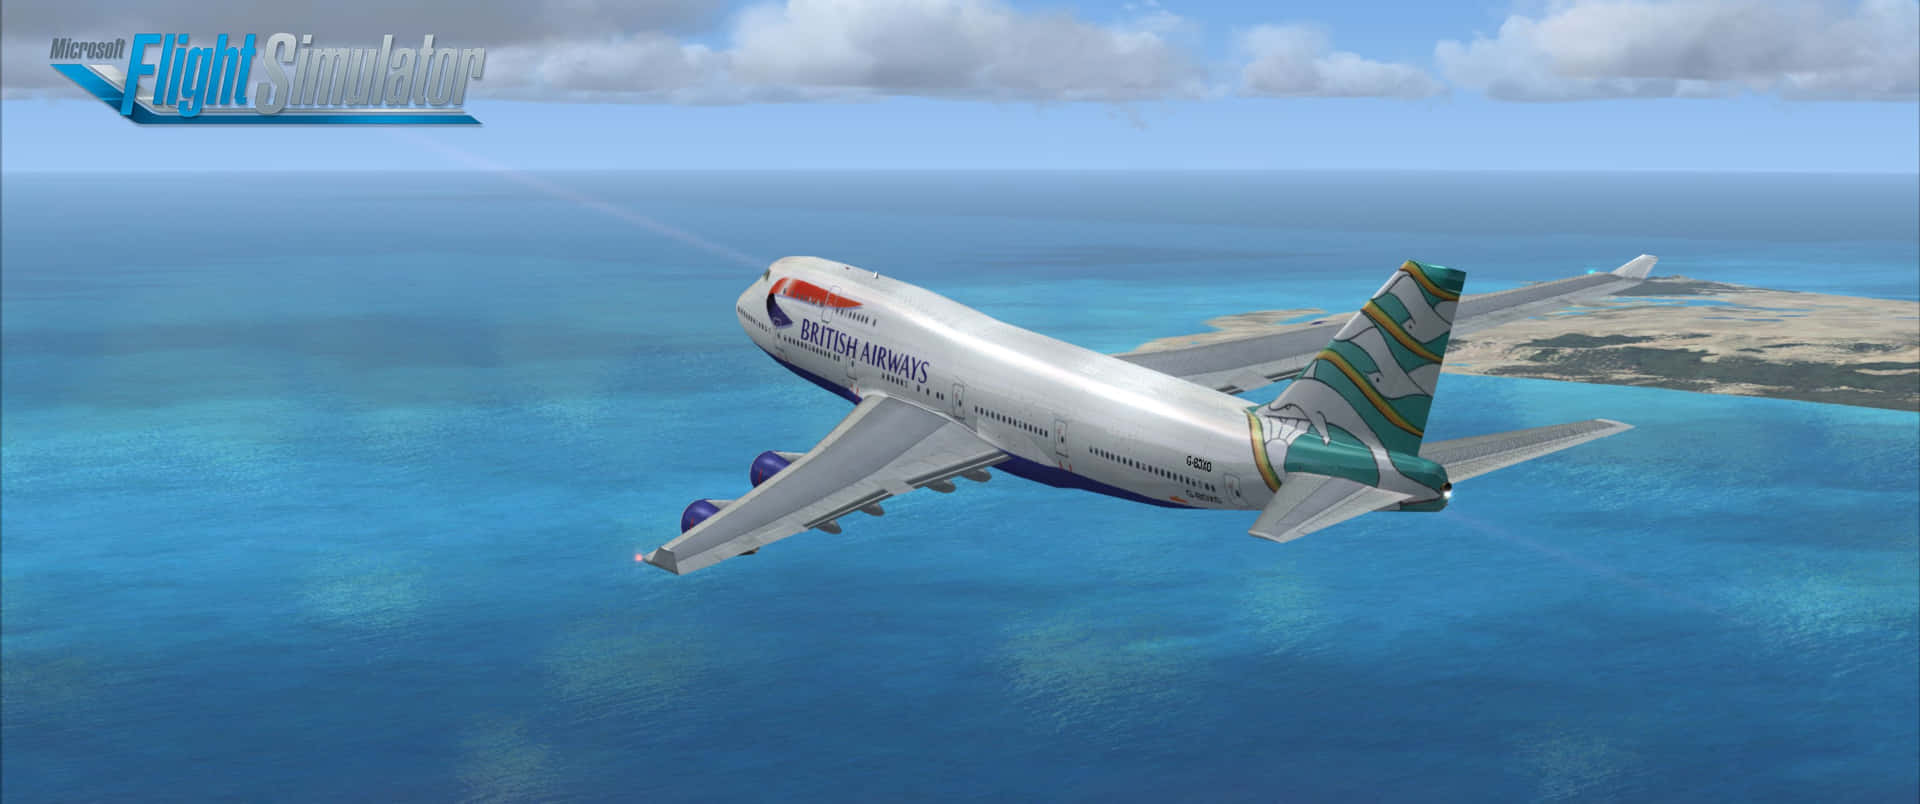 3440x1440p Microsoft Flight Simulator Bakgrund